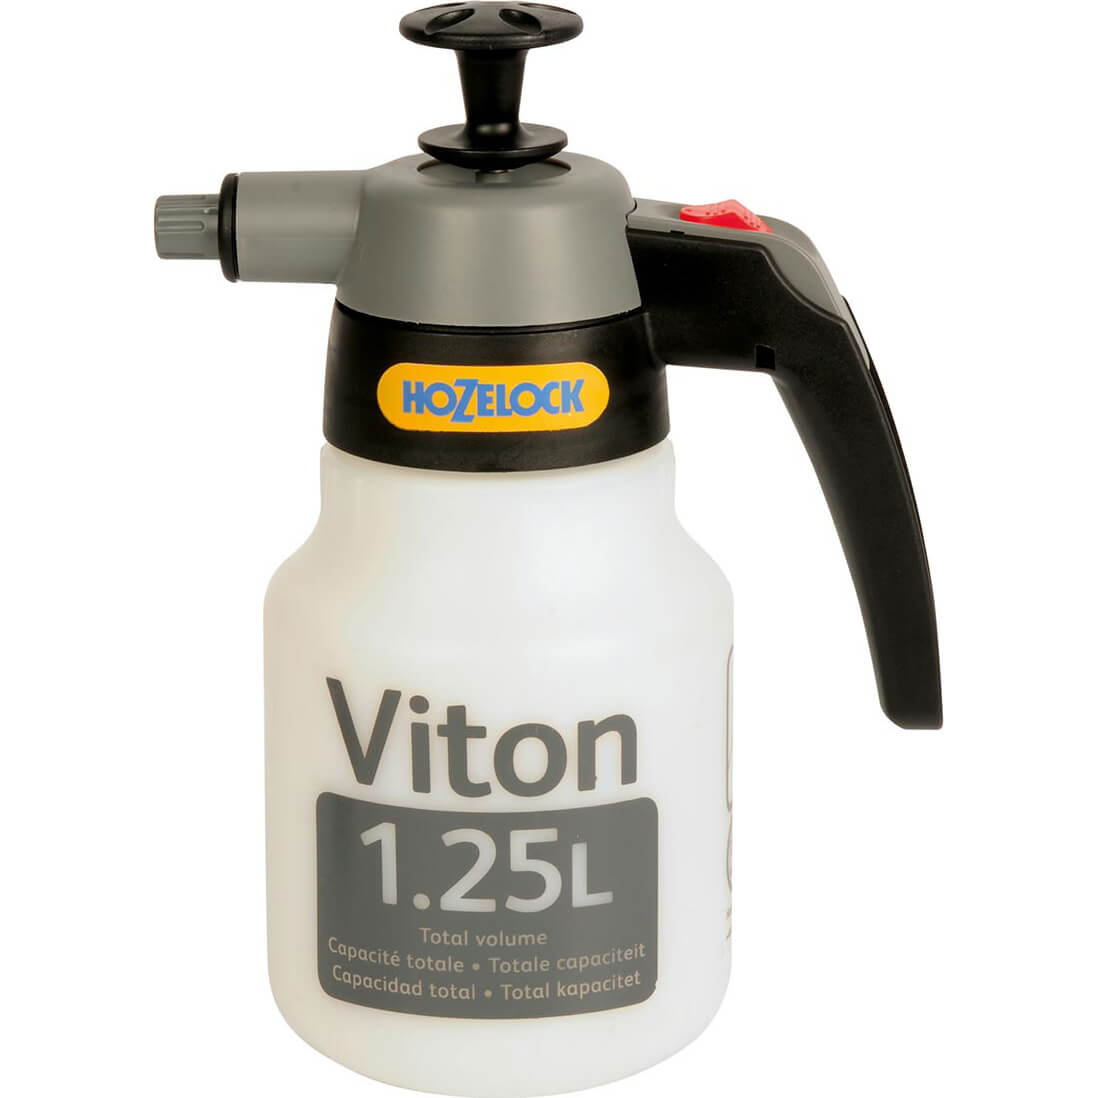 Image of Hozelock Viton Hand Pressure Sprayer 1.25l